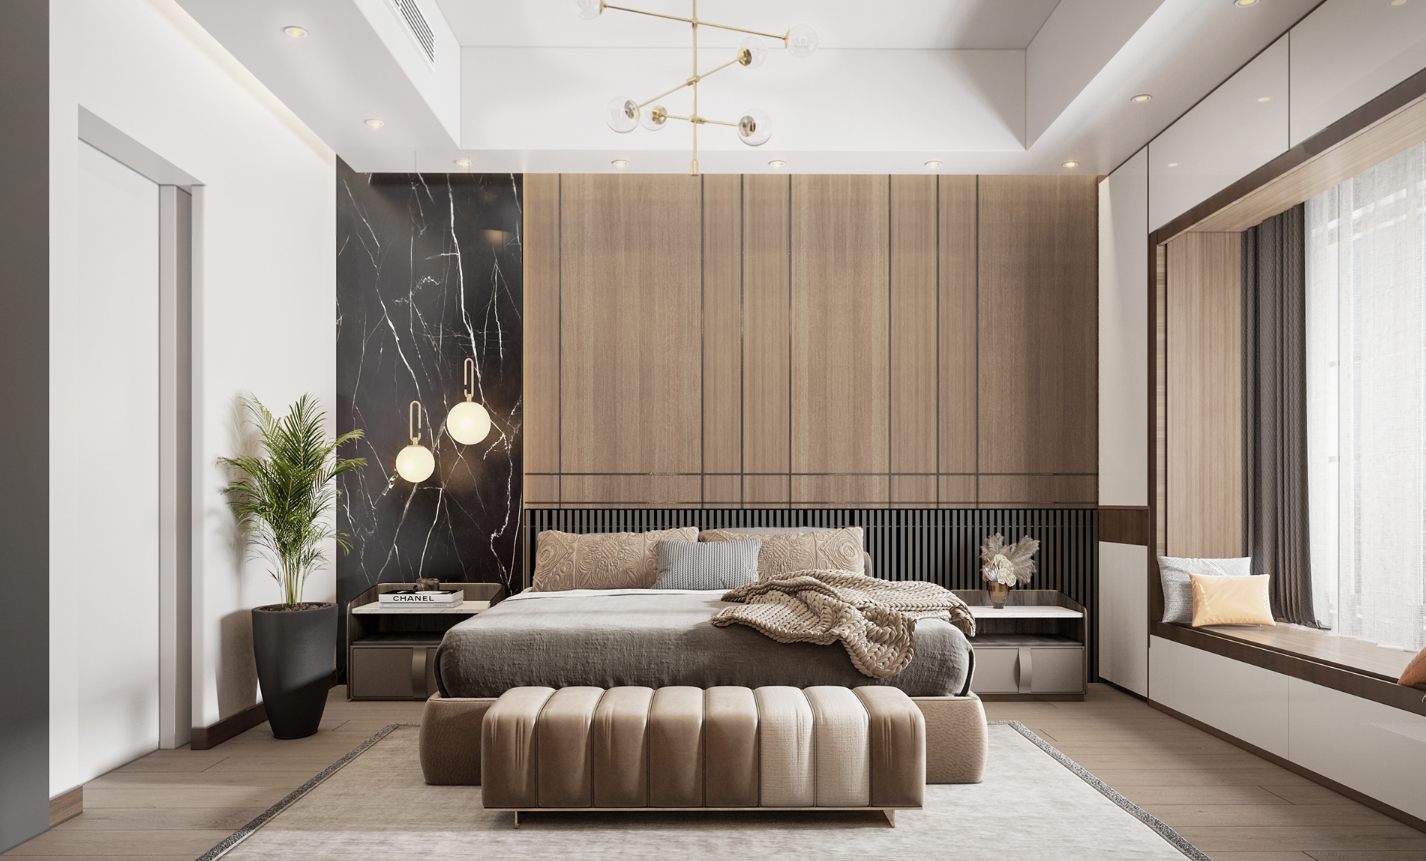 brown modern bedroom with hanging lights, chandelier, simple white room rug design, side table and indoor plants, door design